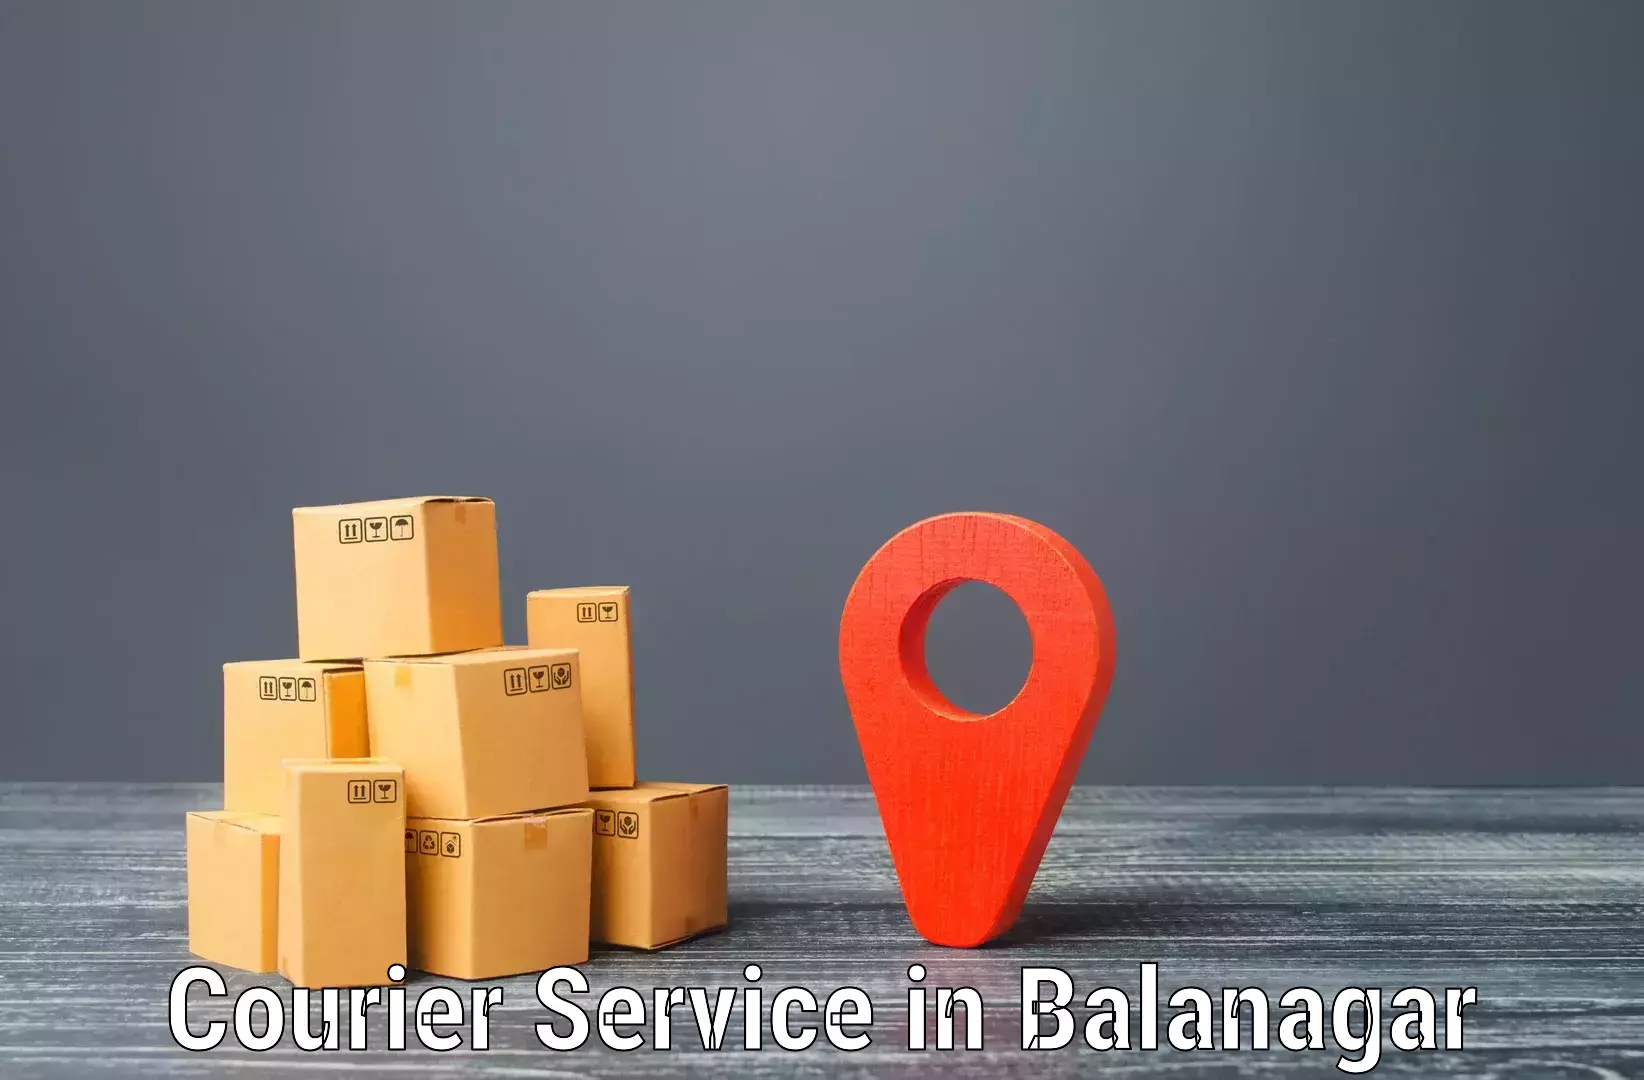 Shipping and handling in Balanagar